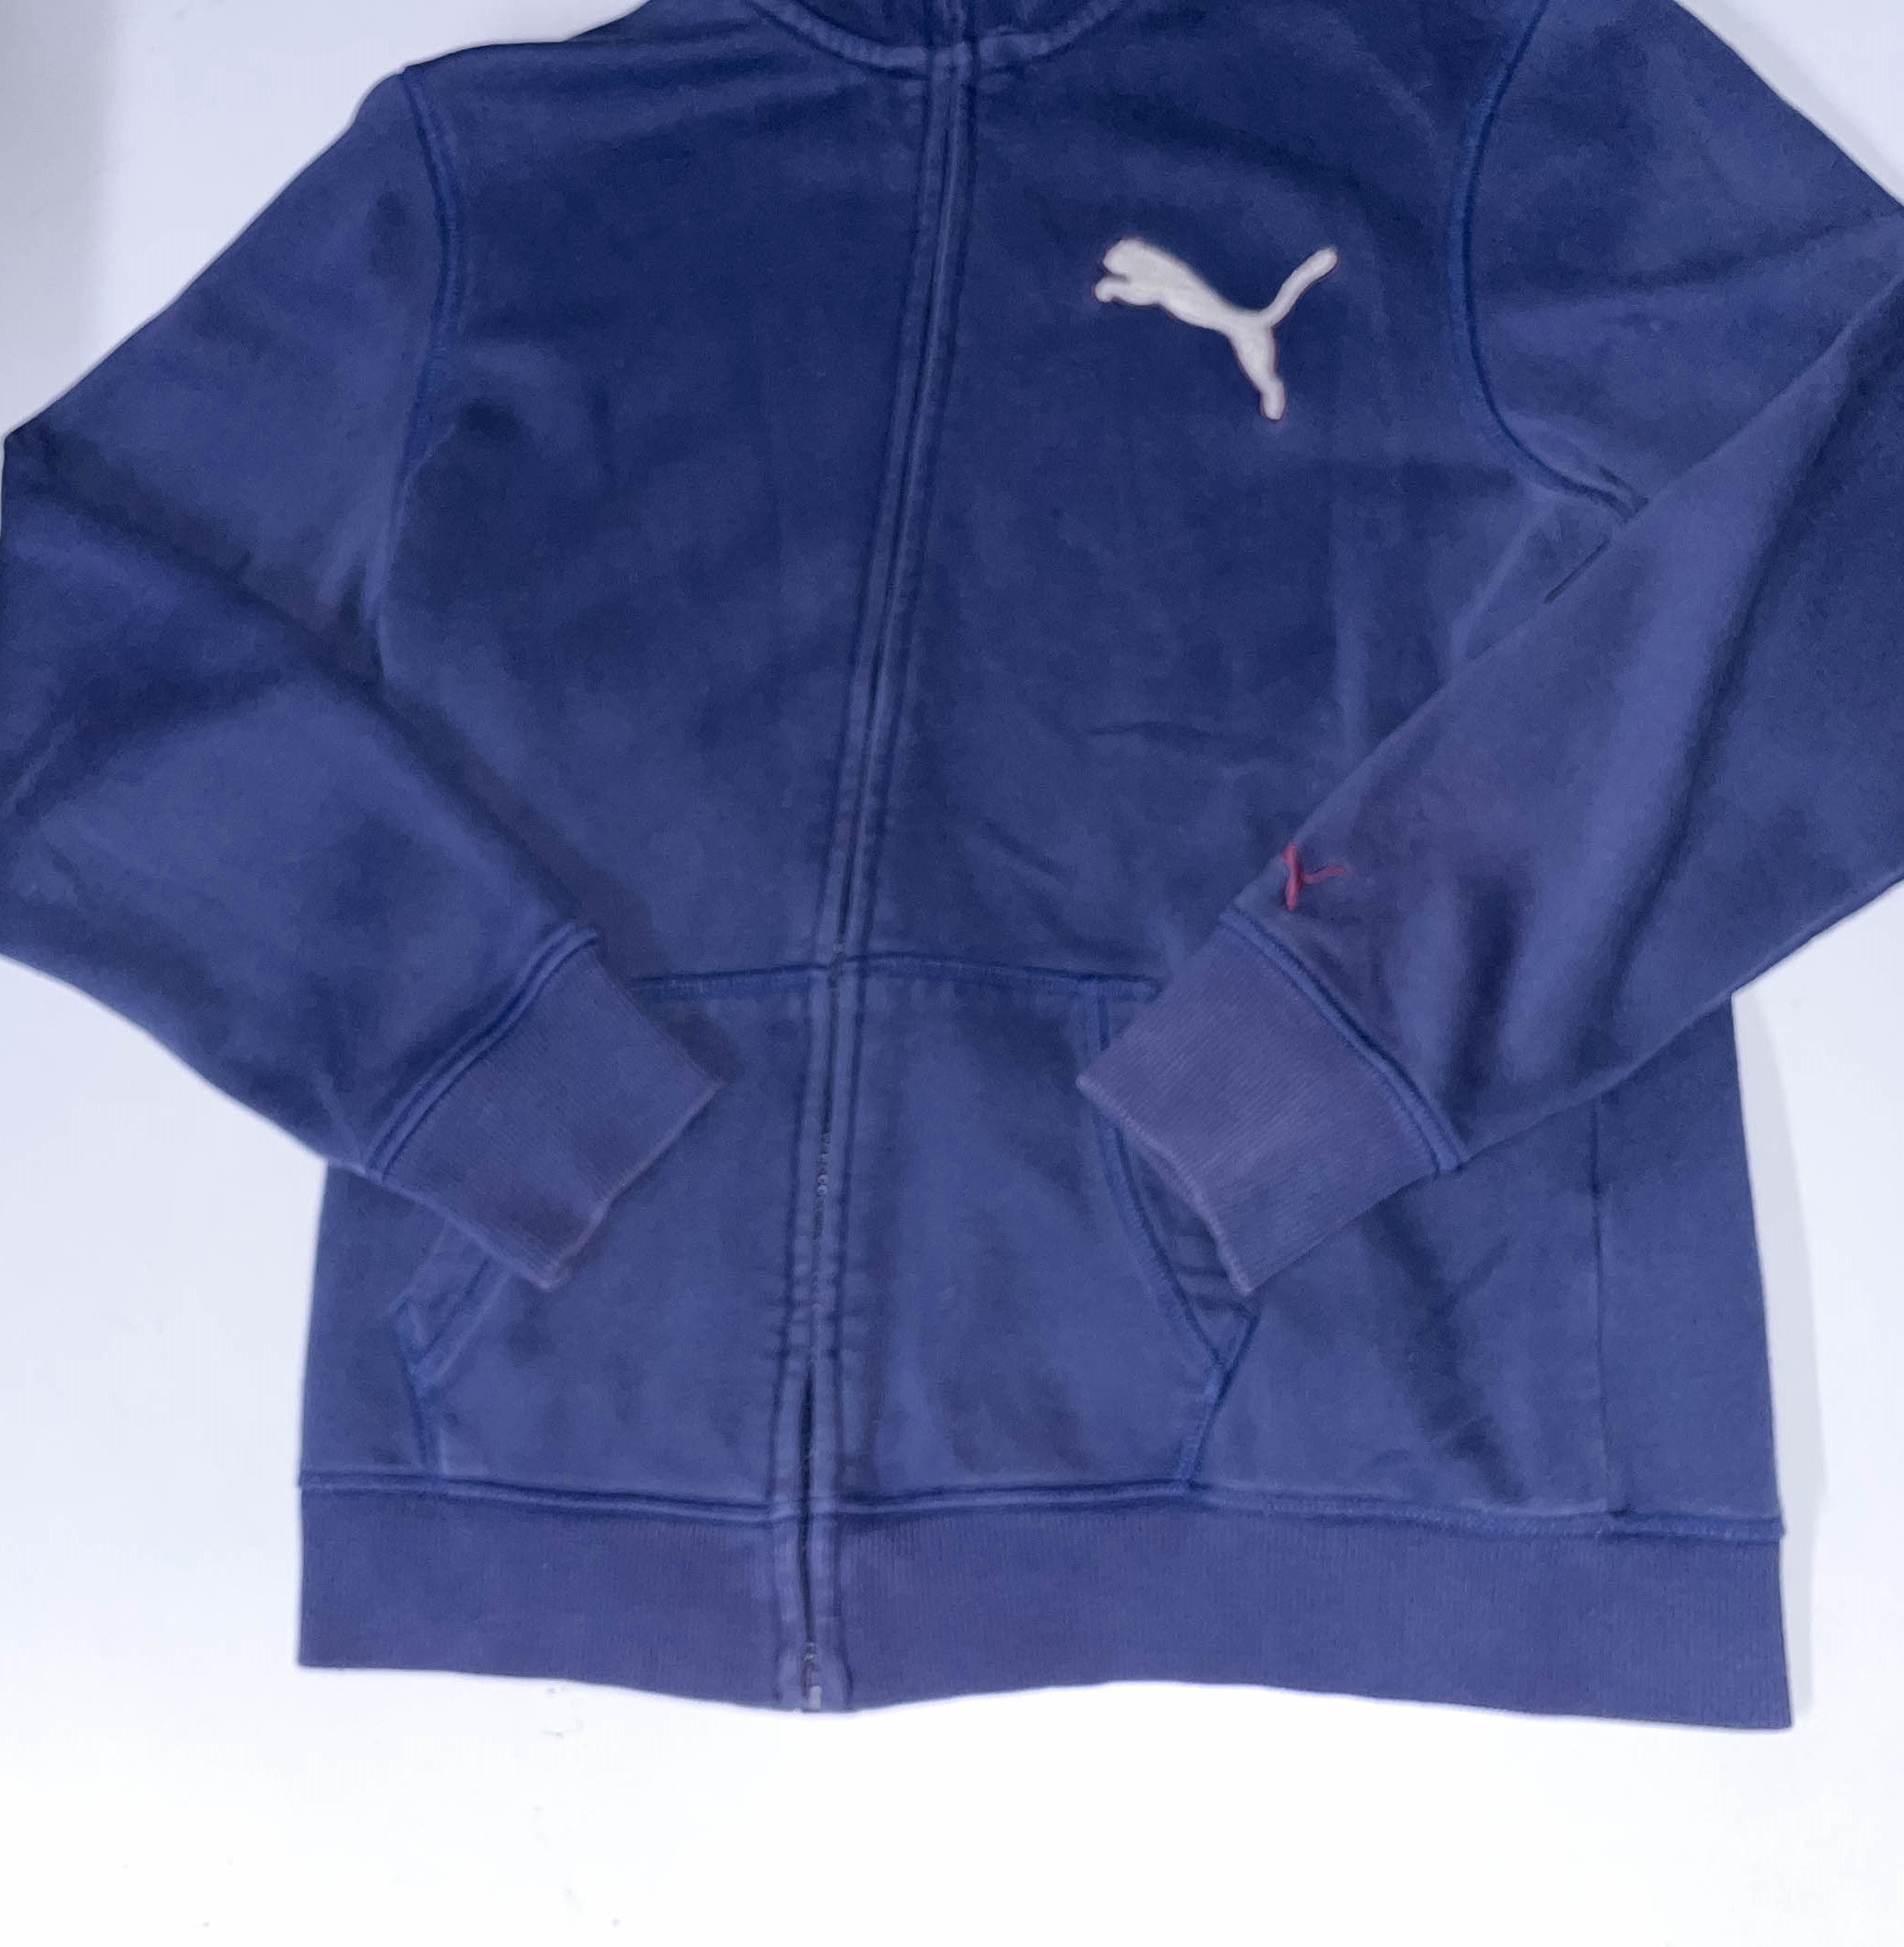 Vintage Puma Navy Full zip up medium sweatshirt jacket